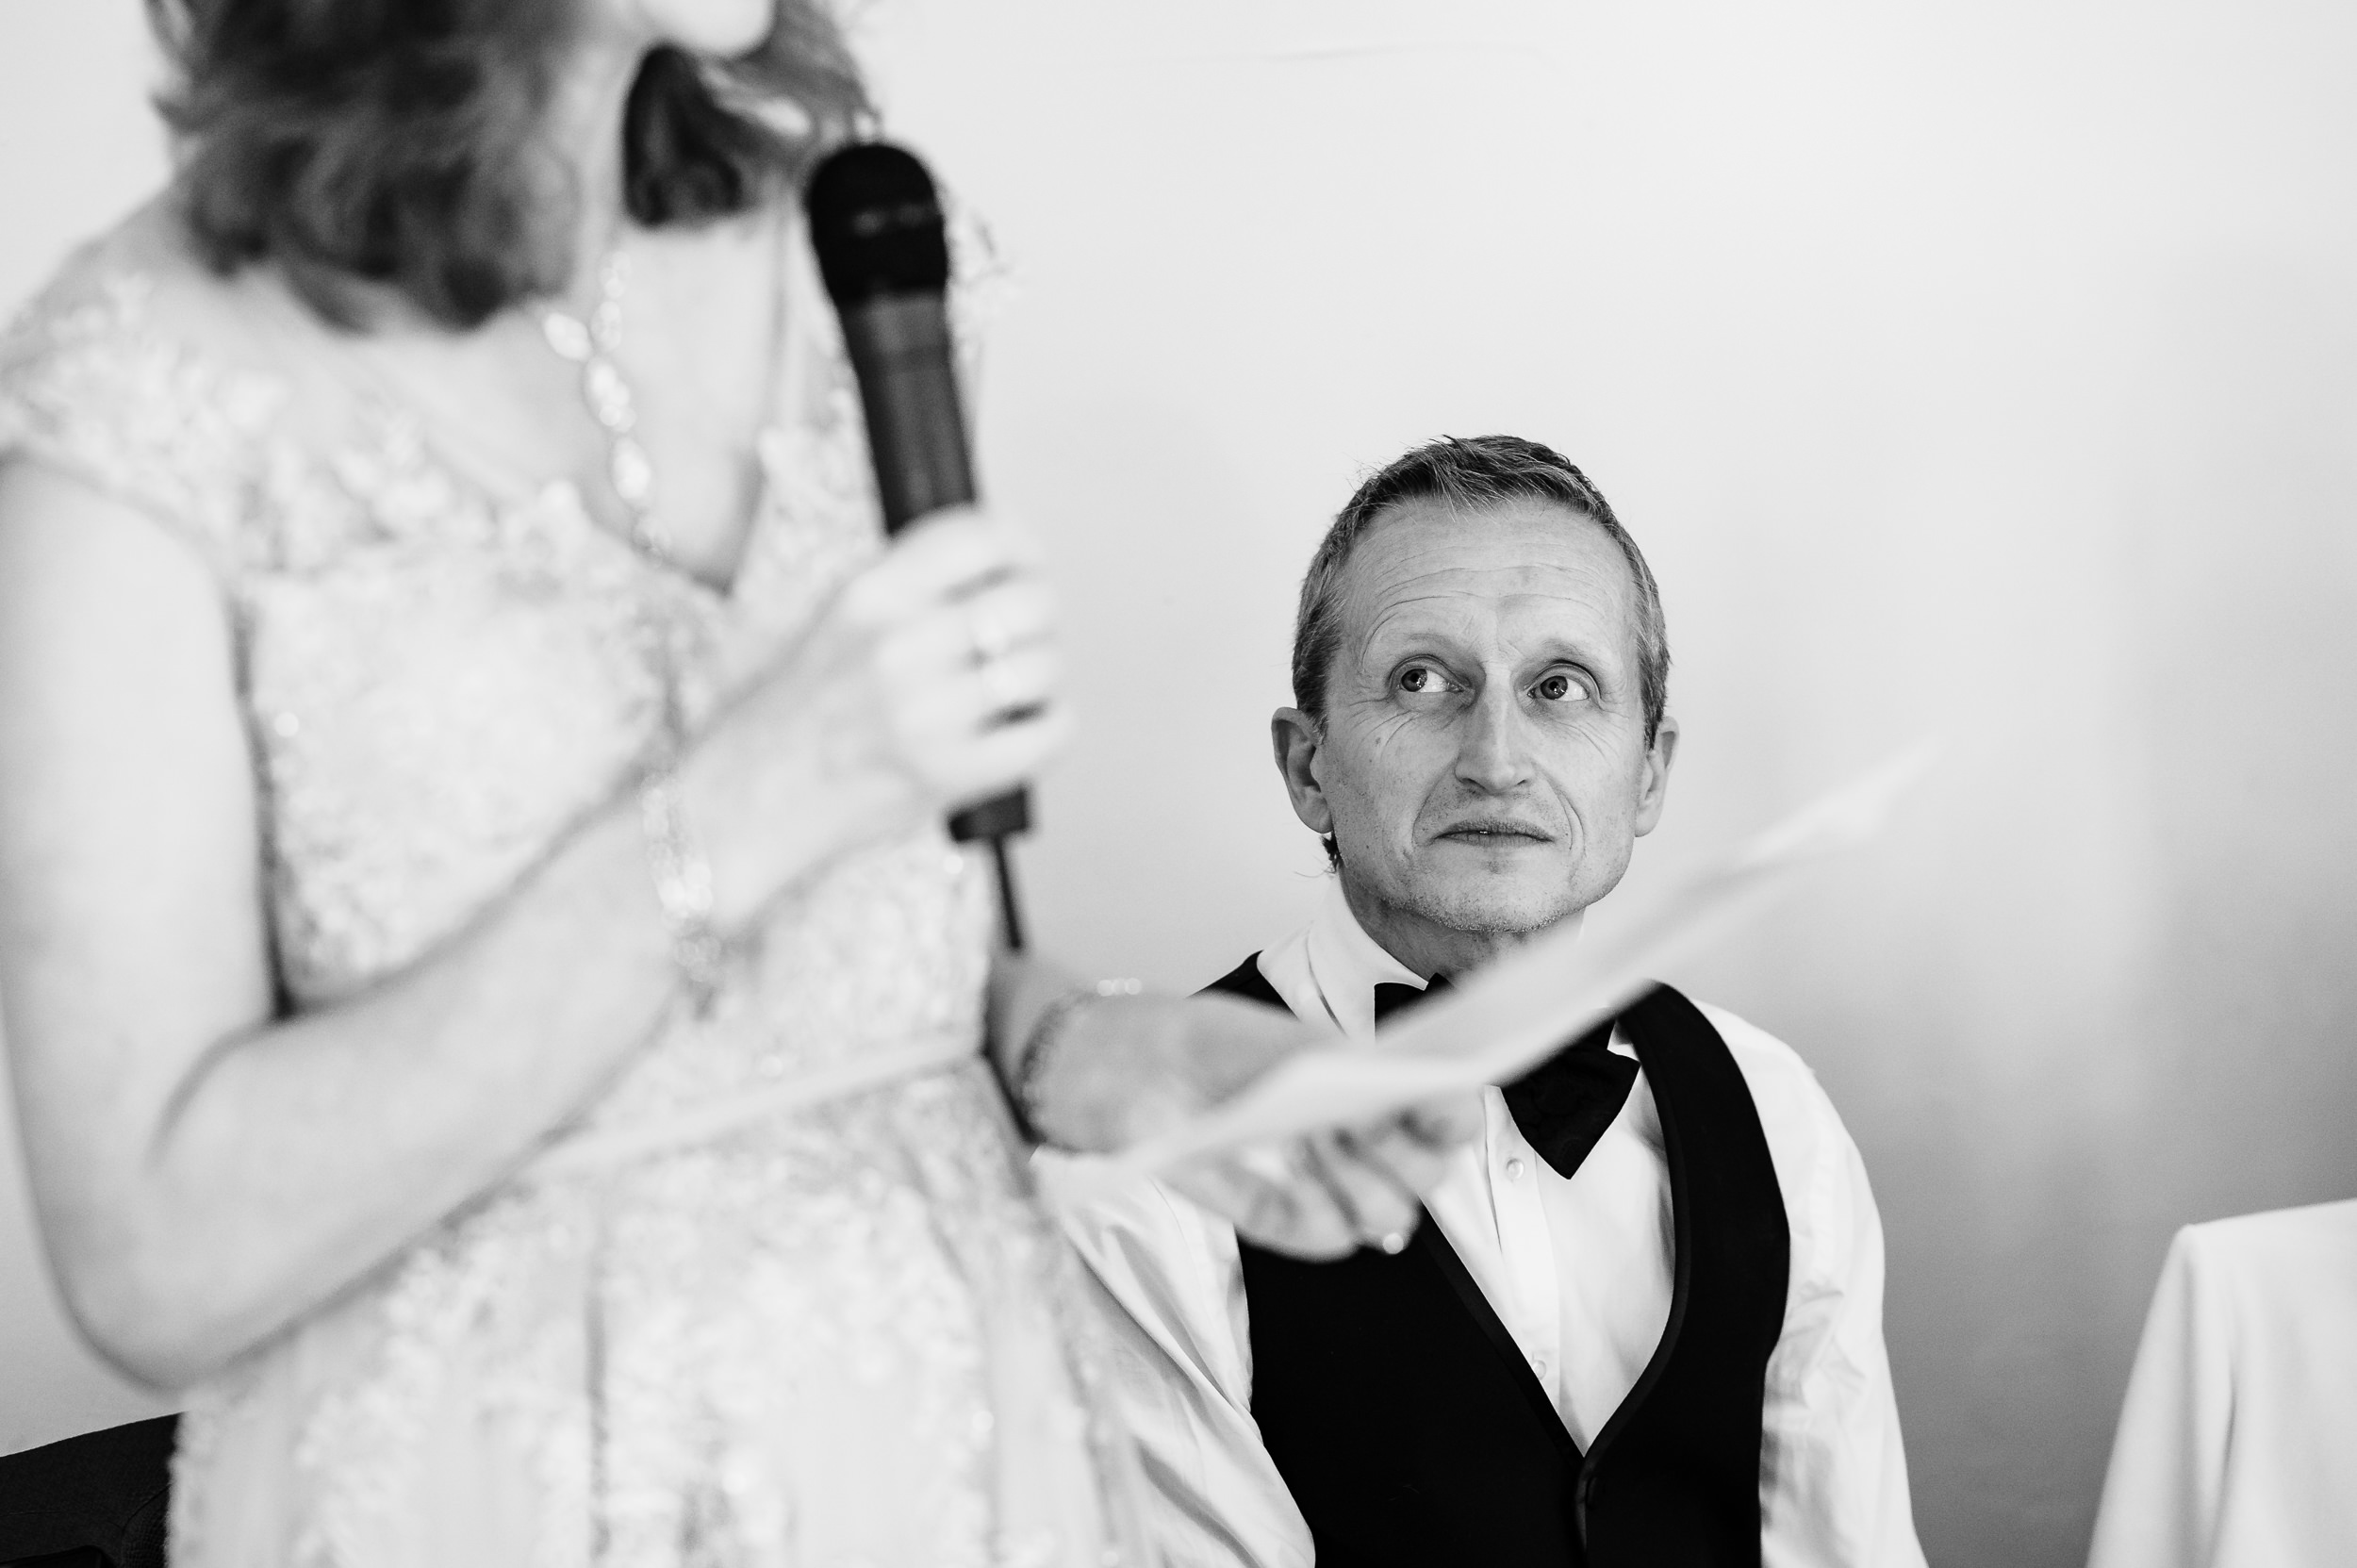 speeches at dodmoor house wedding